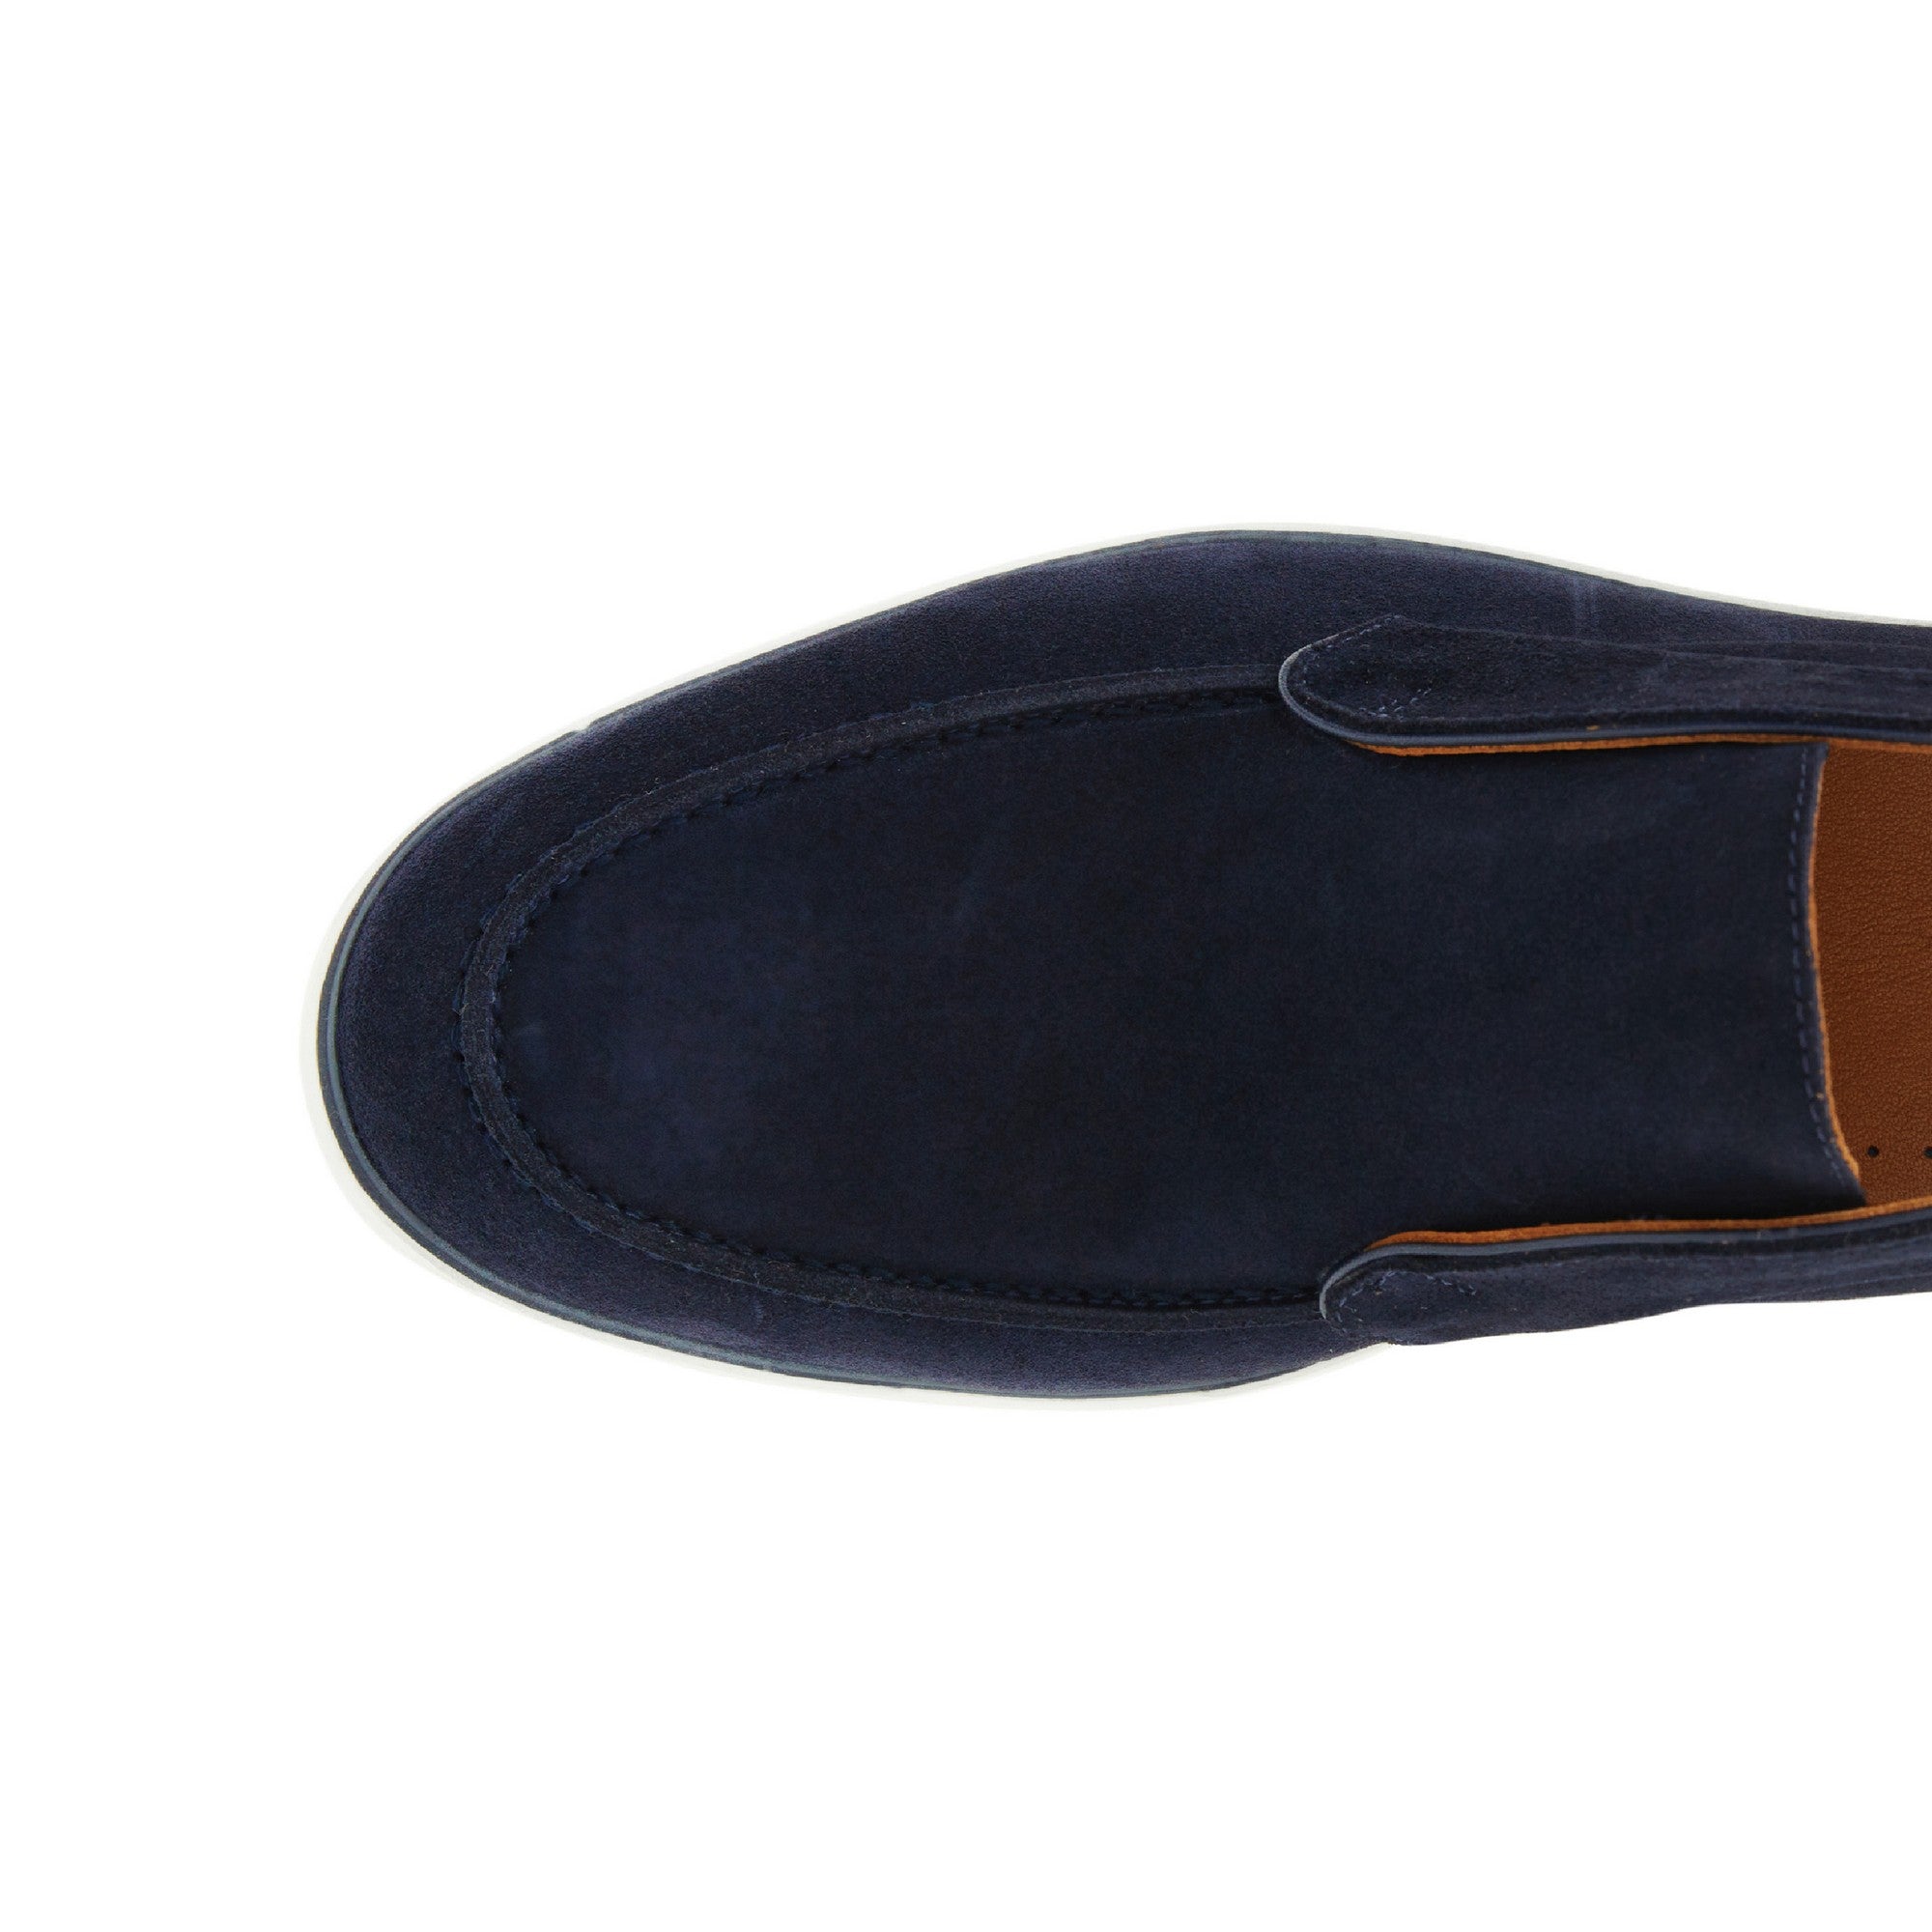 Men's Suede Calf Leather Open Walk Handmade Chukka Boots M9000